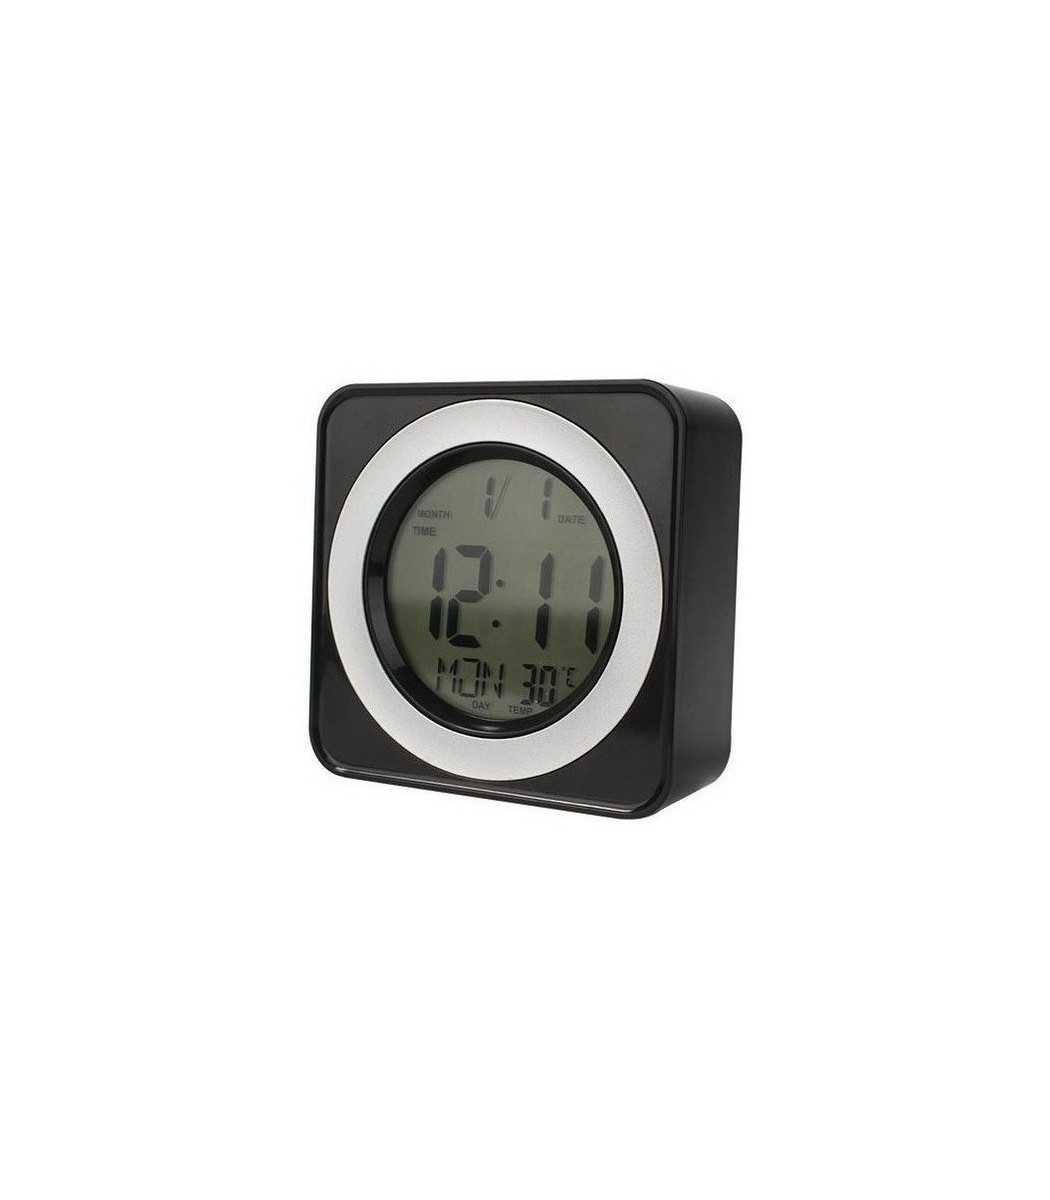 Desktop Digital clock with alarm functions big display